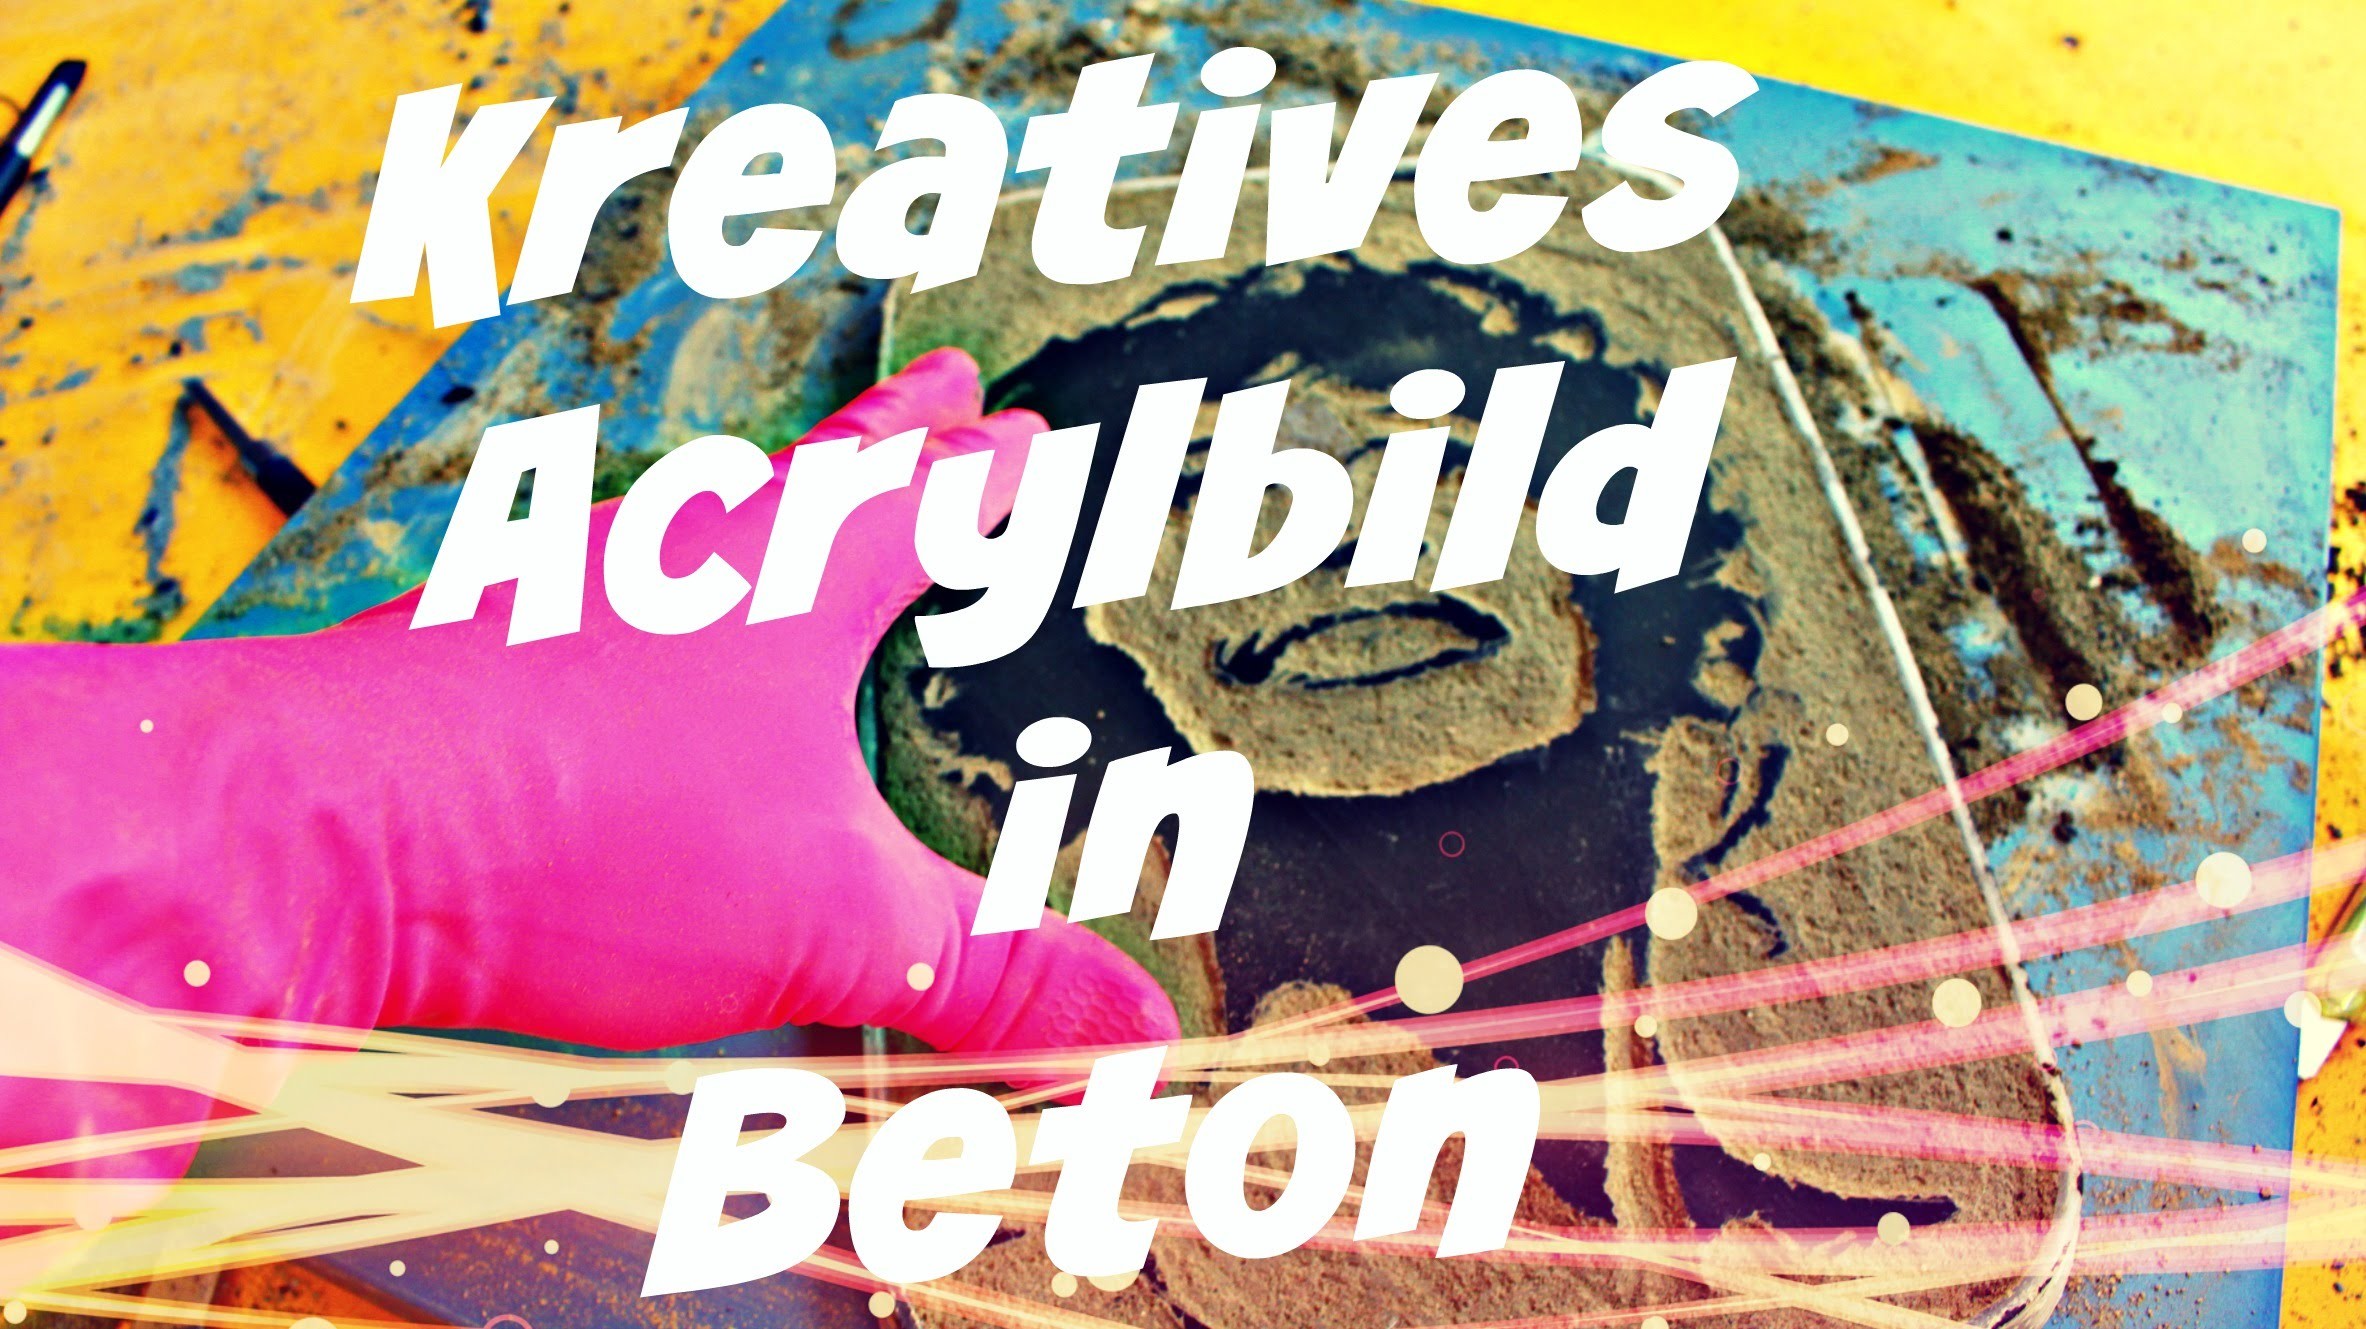 DIY: Beton Kreativ: Acrylbild in KNET-BETON GRAVIEREN!